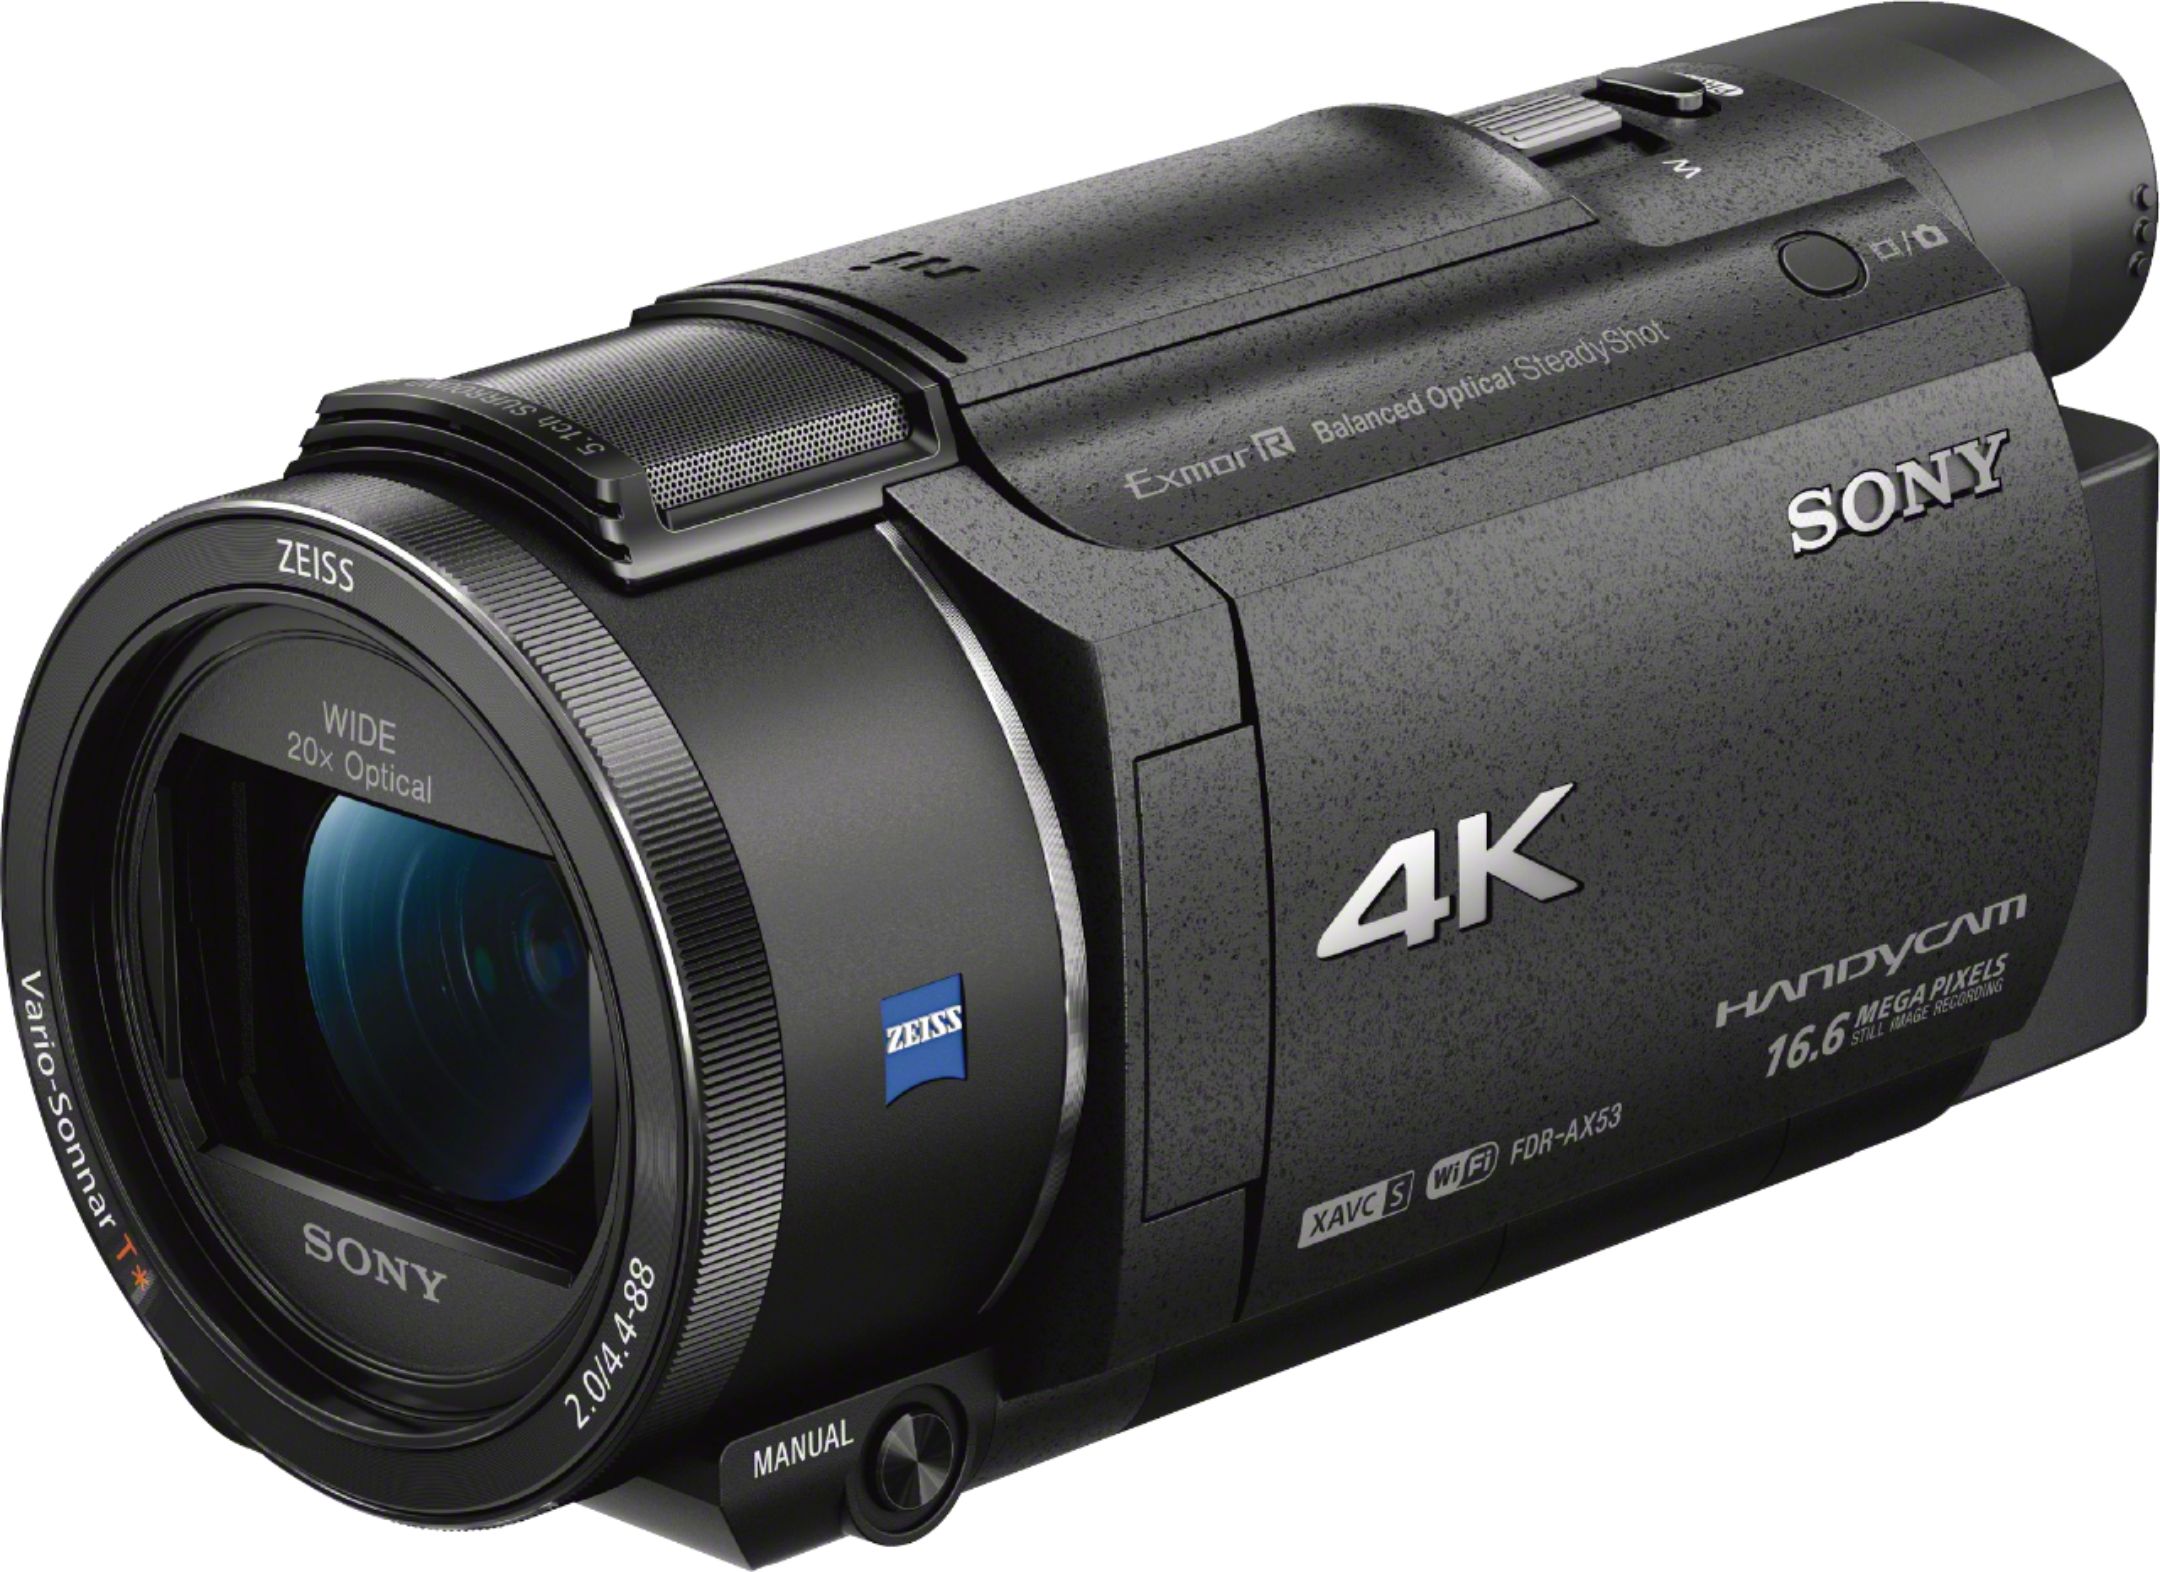 Handycam AX53 Flash Memory Premium Camcorder Black FDRAX53/B Best